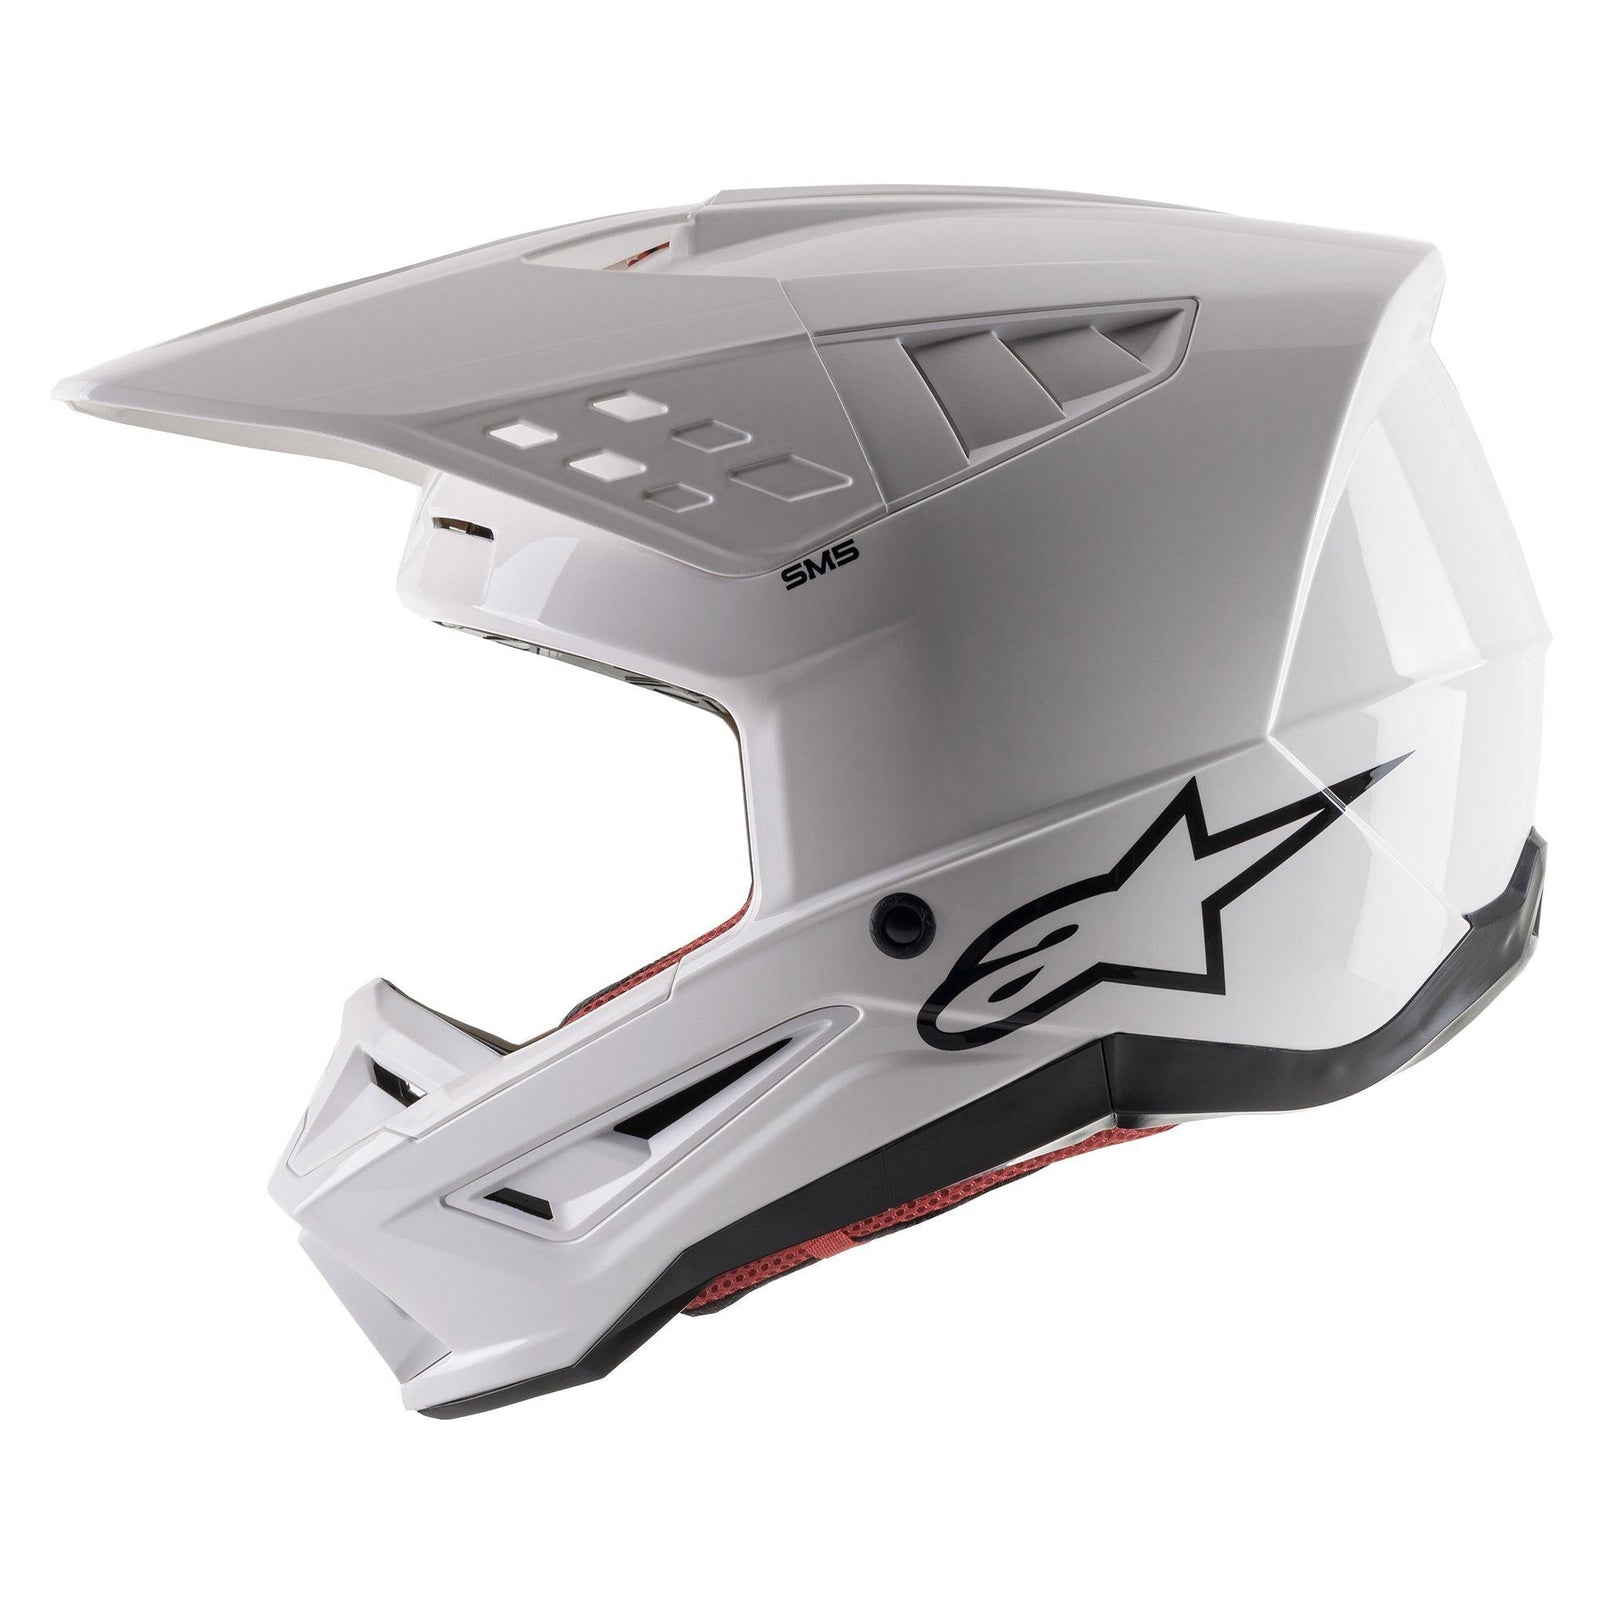 SM5 Solid Helmet